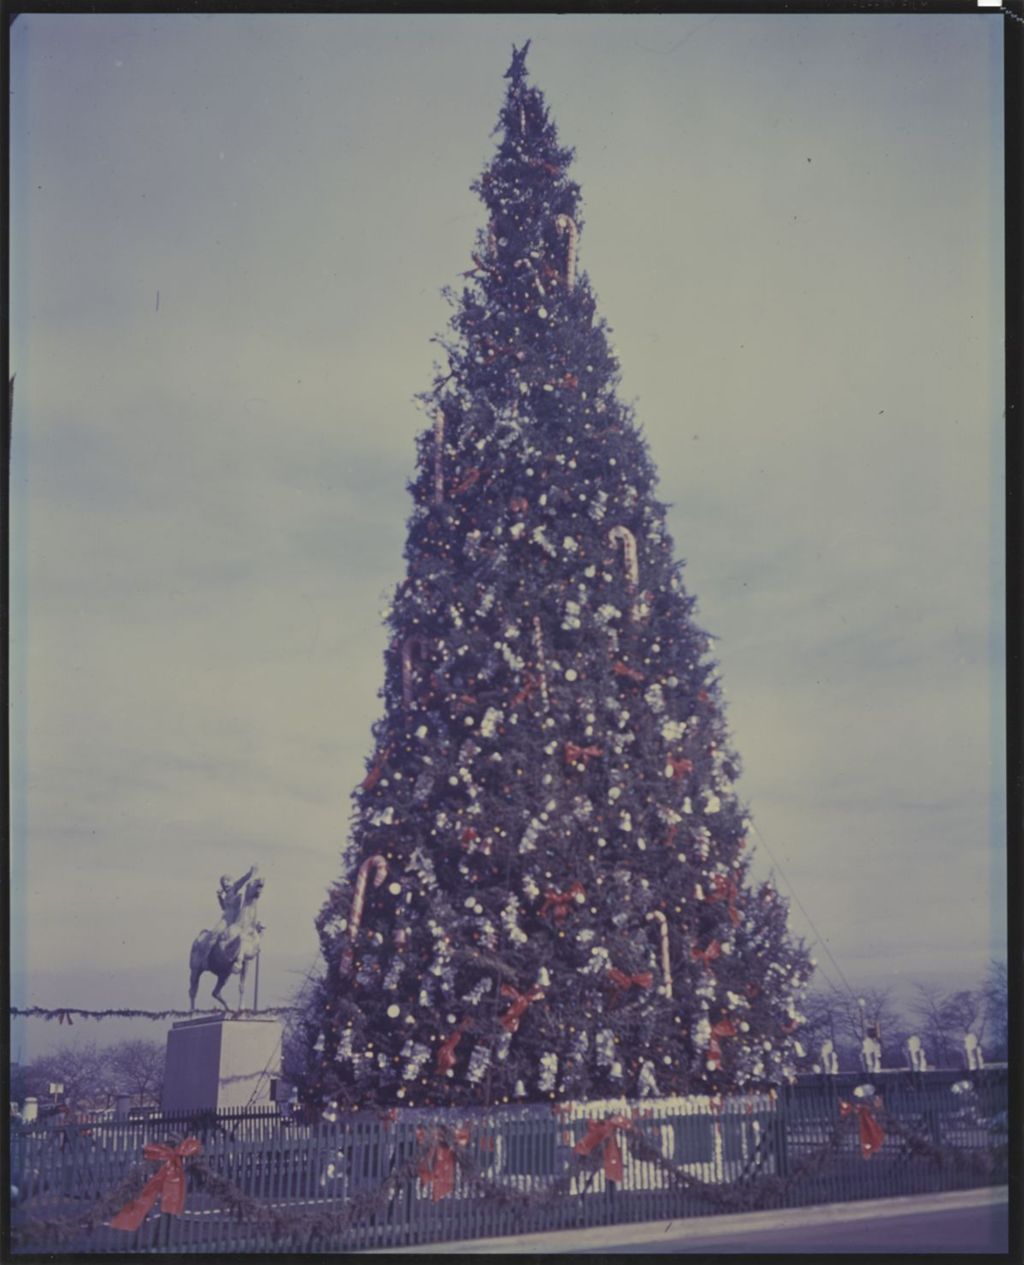 Christmas tree at Michigan Avenue and Congress